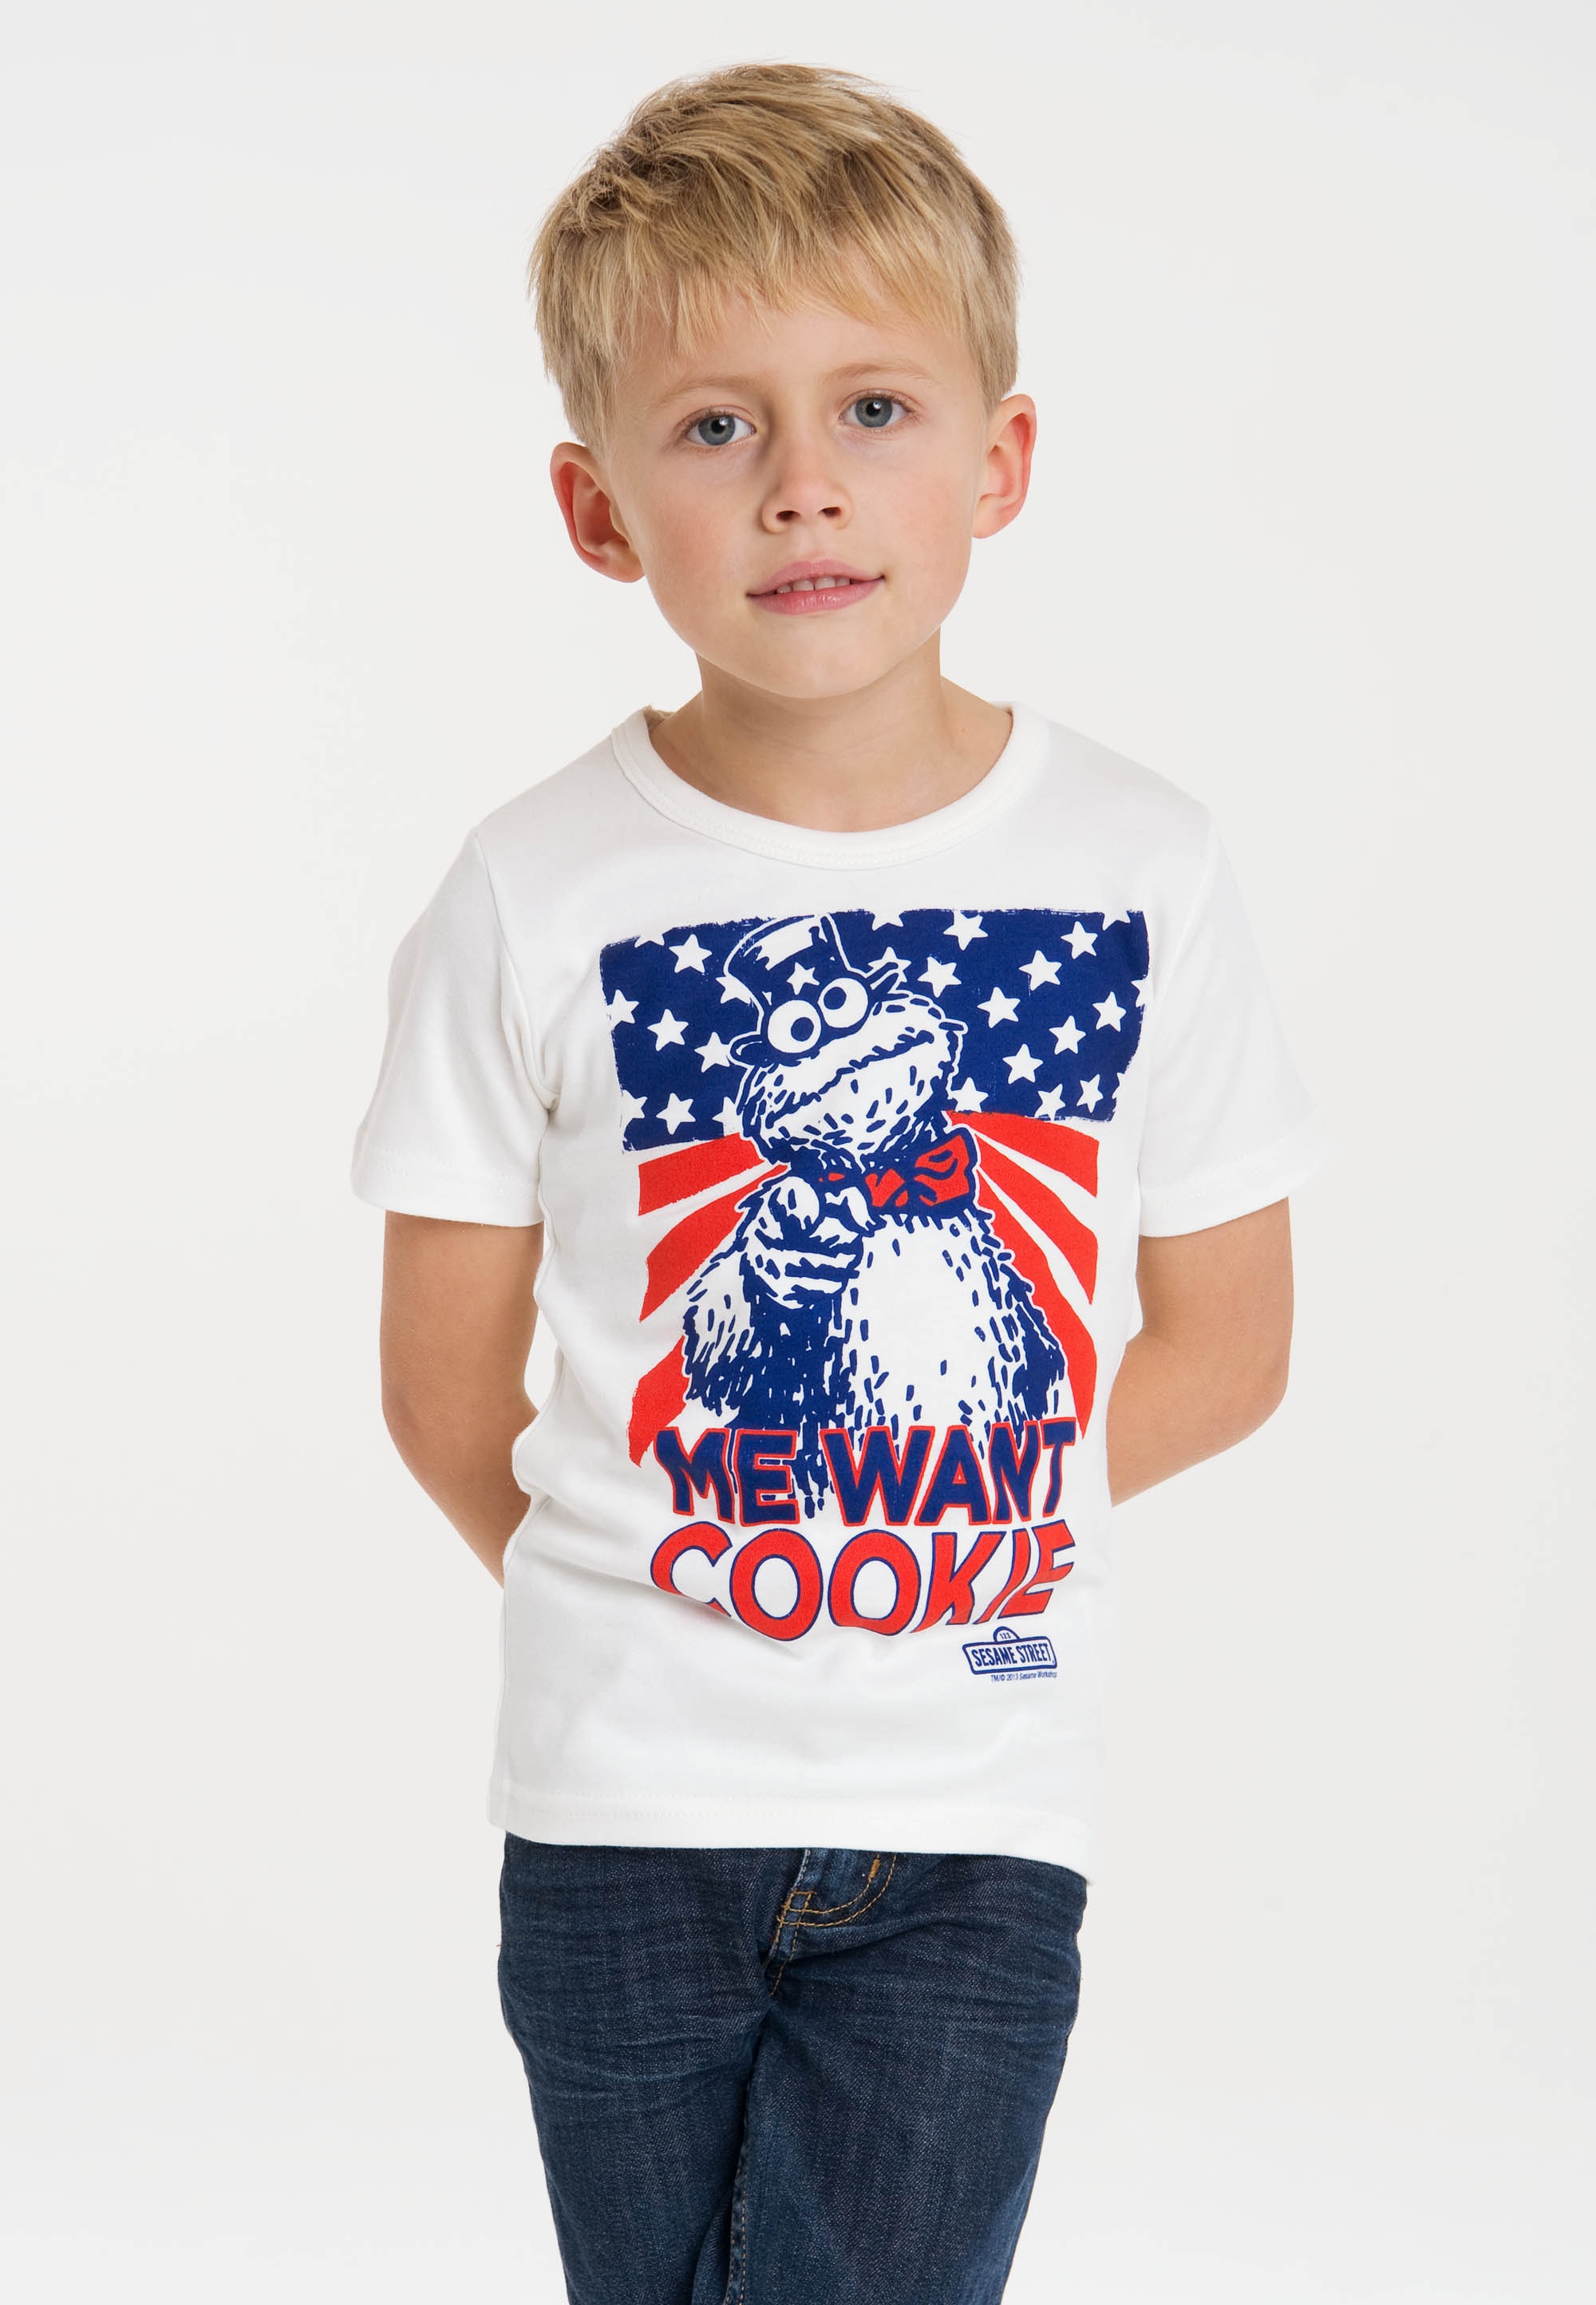 LOGOSHIRT T-Shirt »Cookie Monster - Me Want Cookie«, mit coolem Krümelmonster-Frontdruck